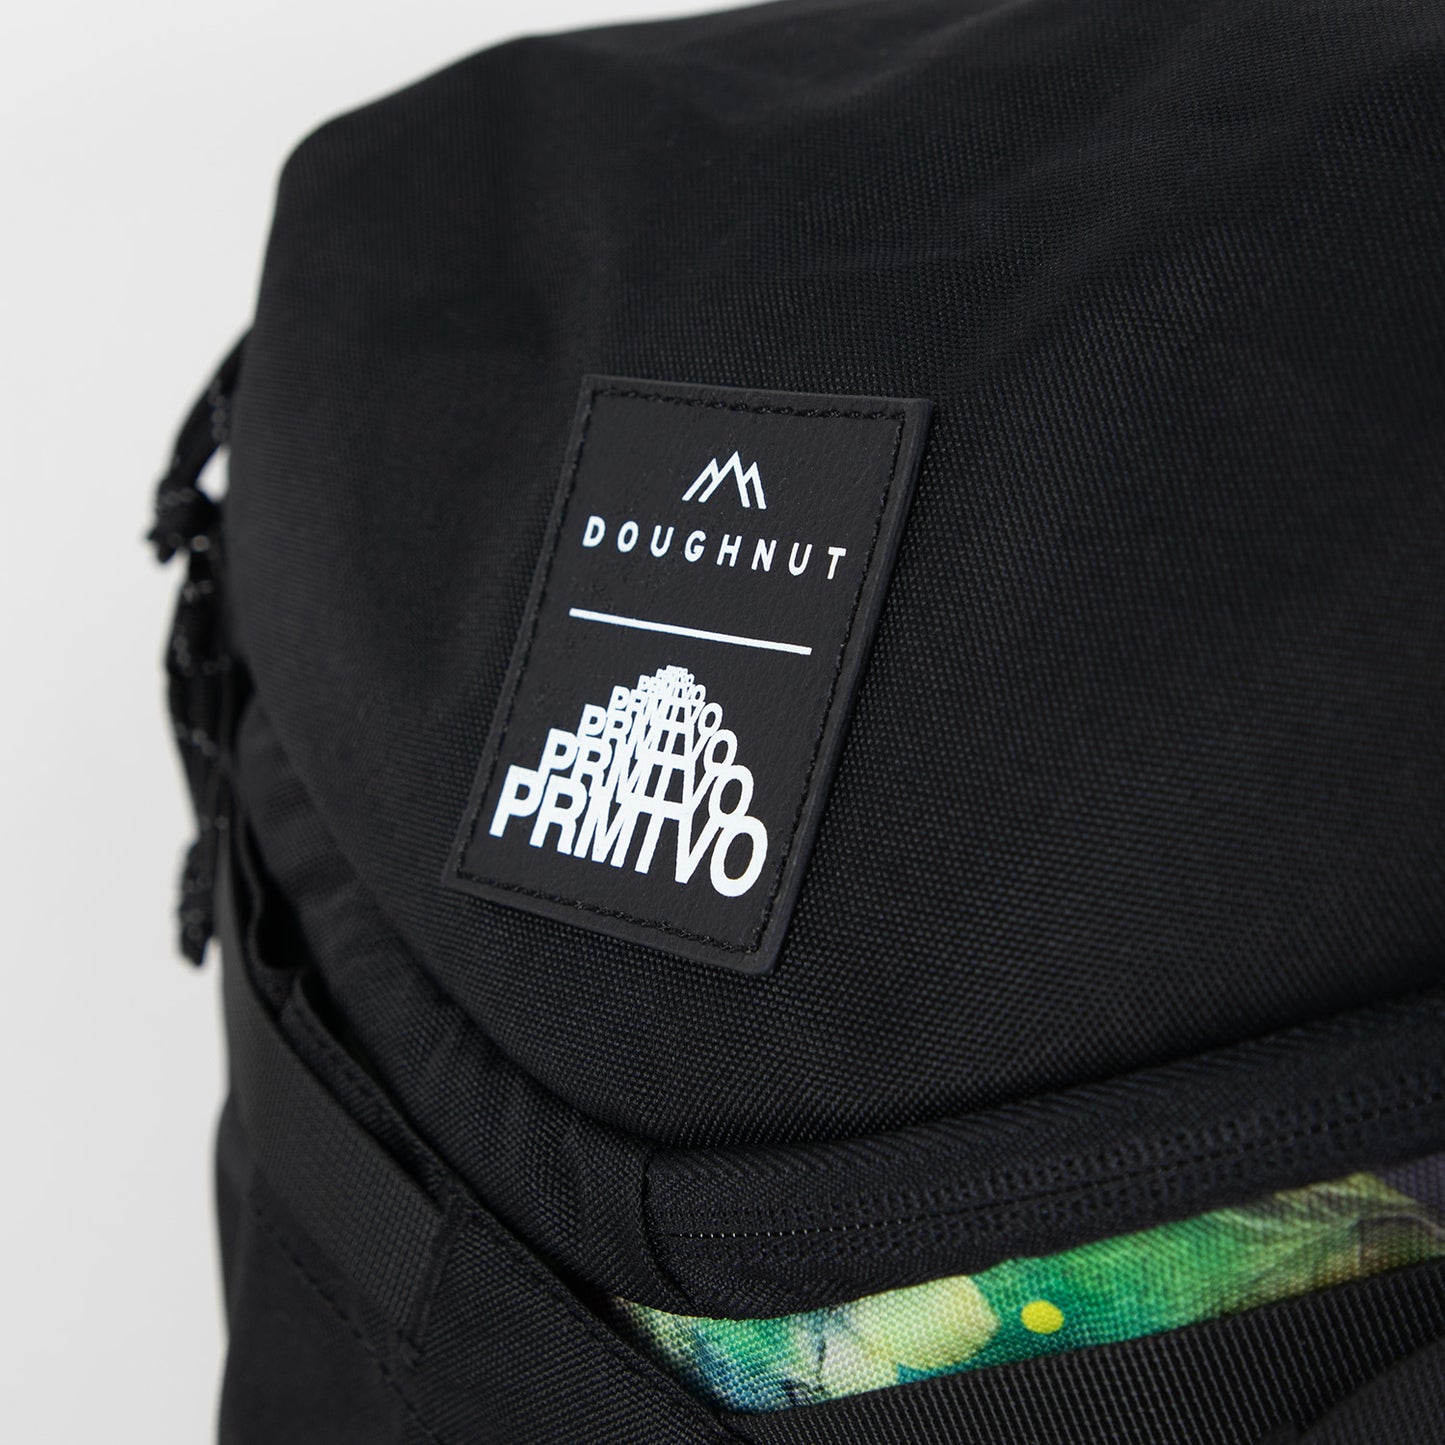 Dynamic Large Doughnut X PRMTVO Series Backpack